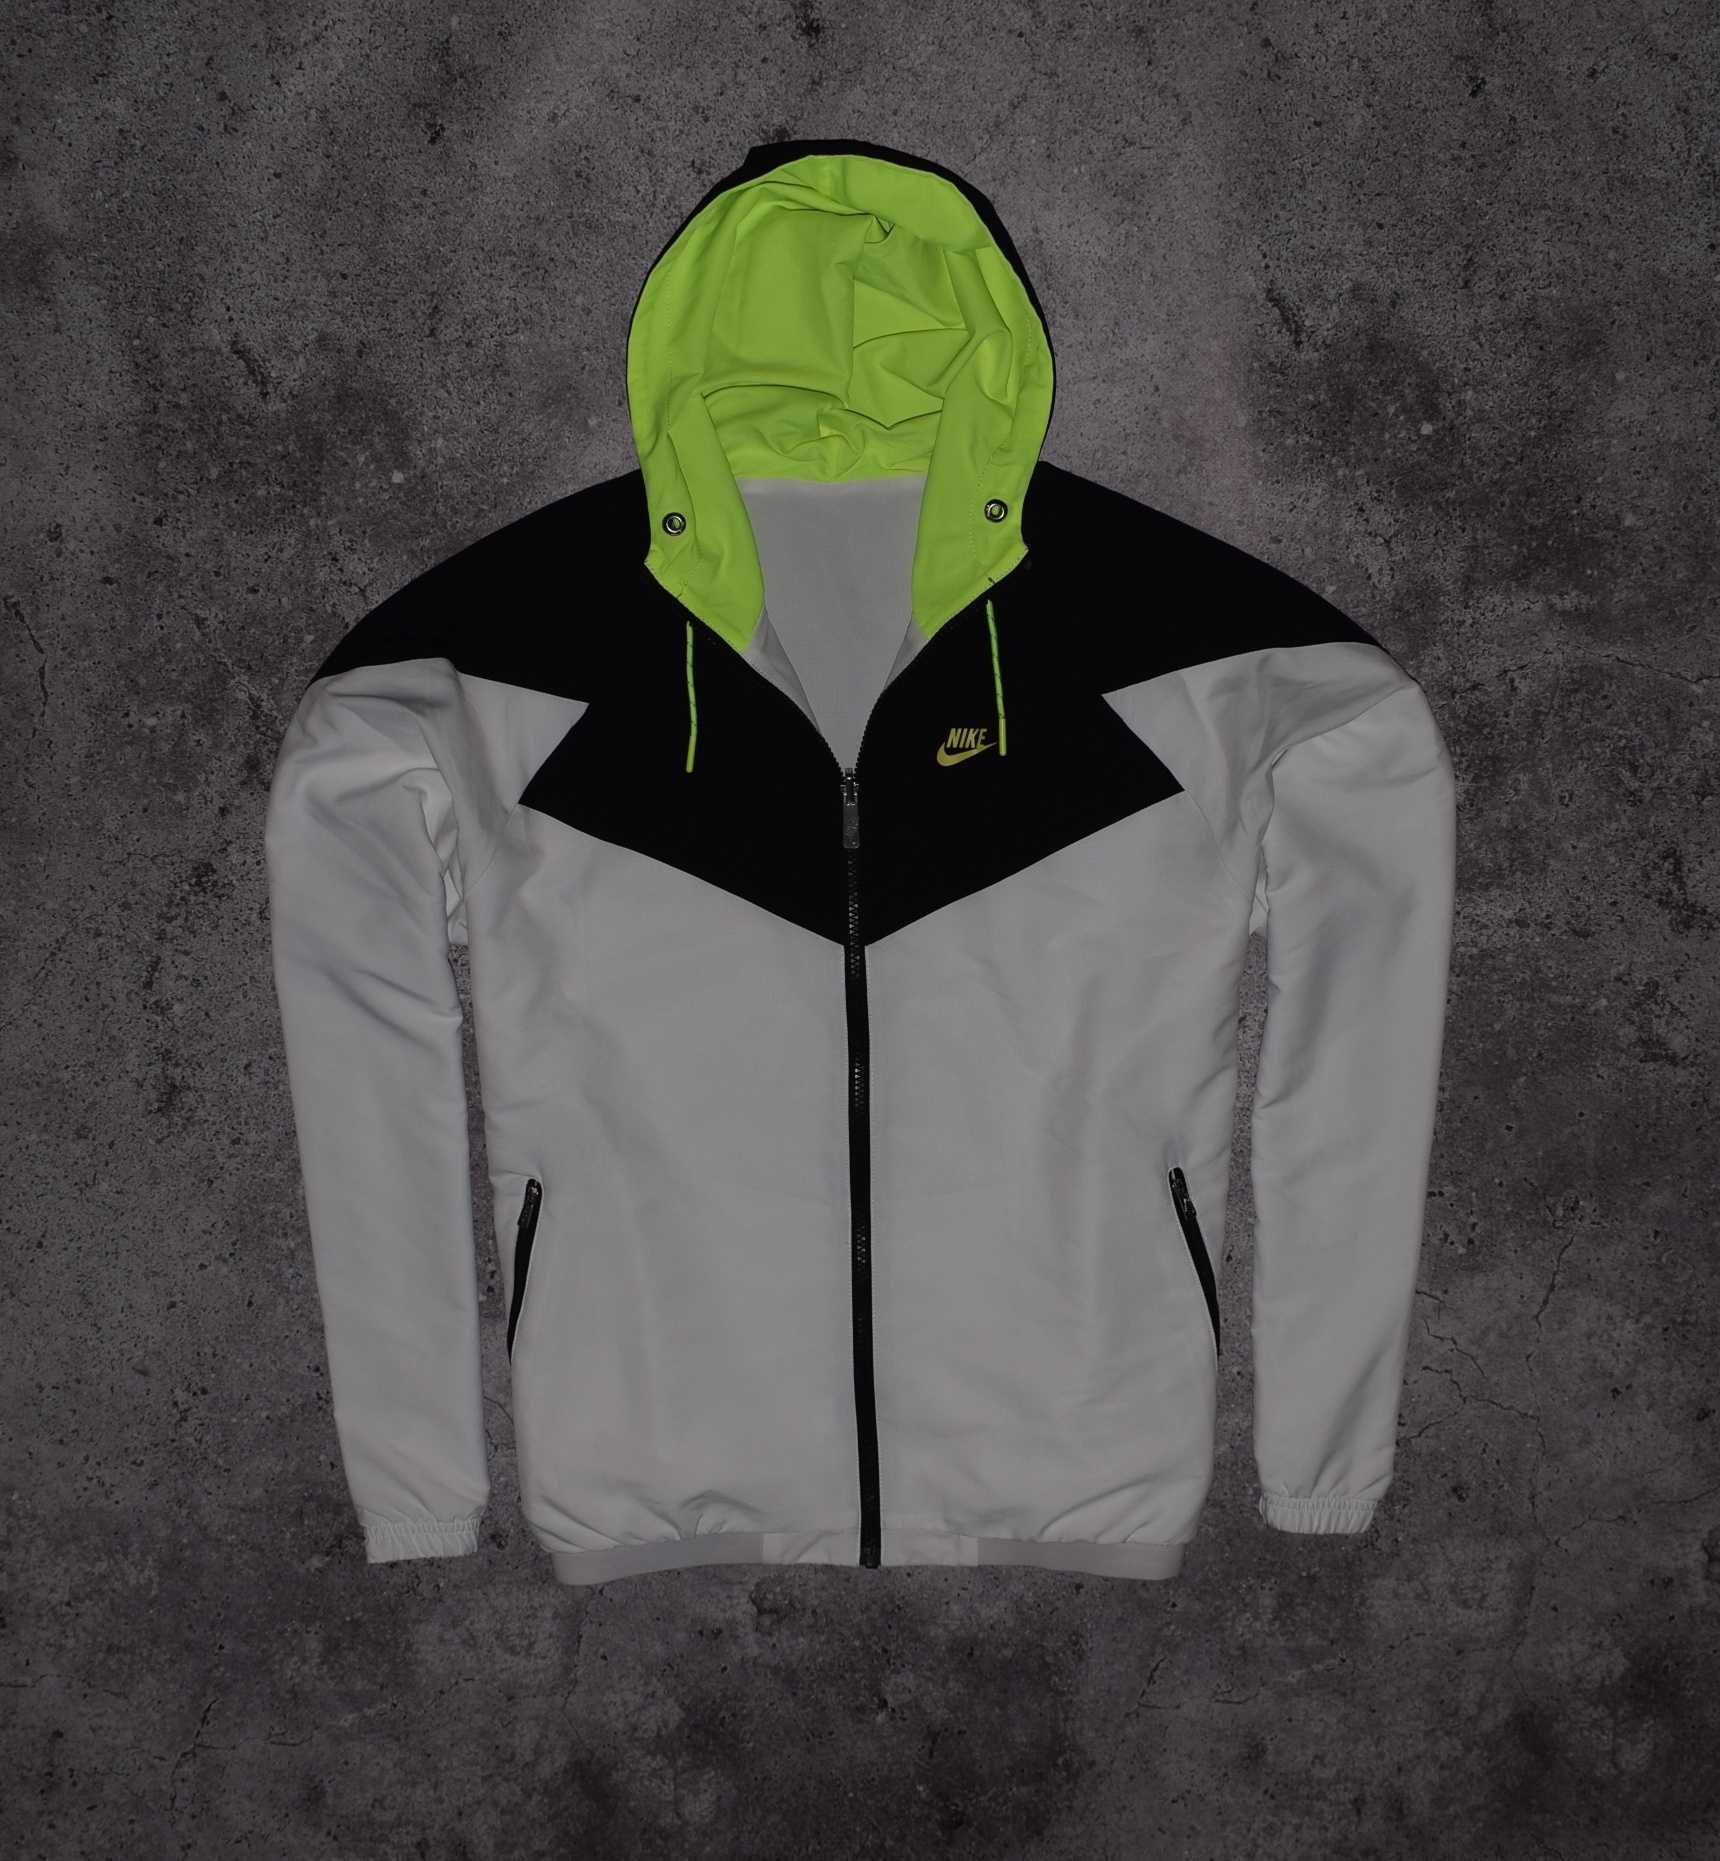 Nike Windrunner Jacket (Мужская Двусторонняя Ветровка Виндранер Найк )